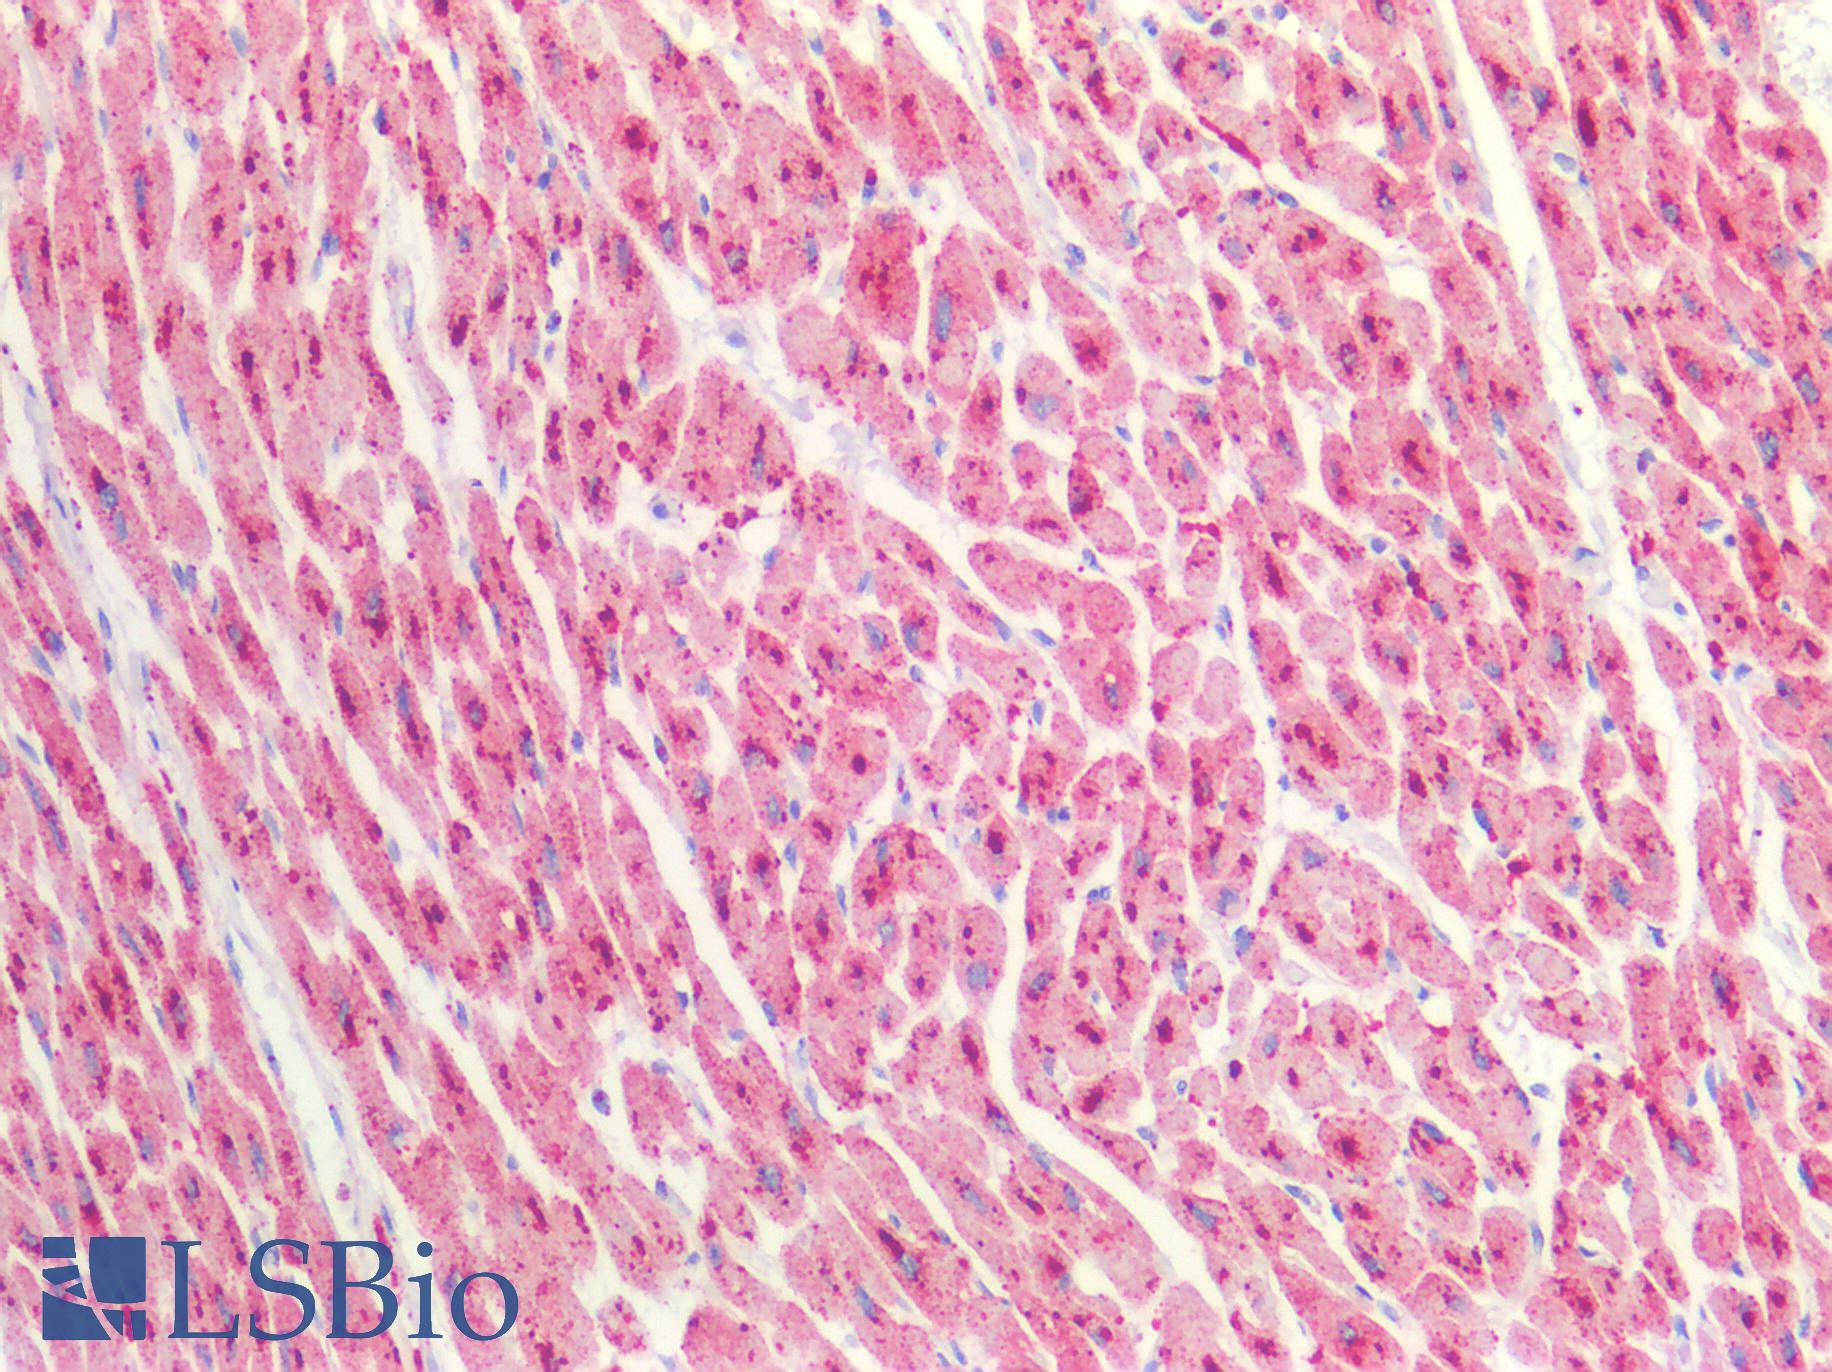 CTSD / Cathepsin D Antibody - Human Heart: Formalin-Fixed, Paraffin-Embedded (FFPE)